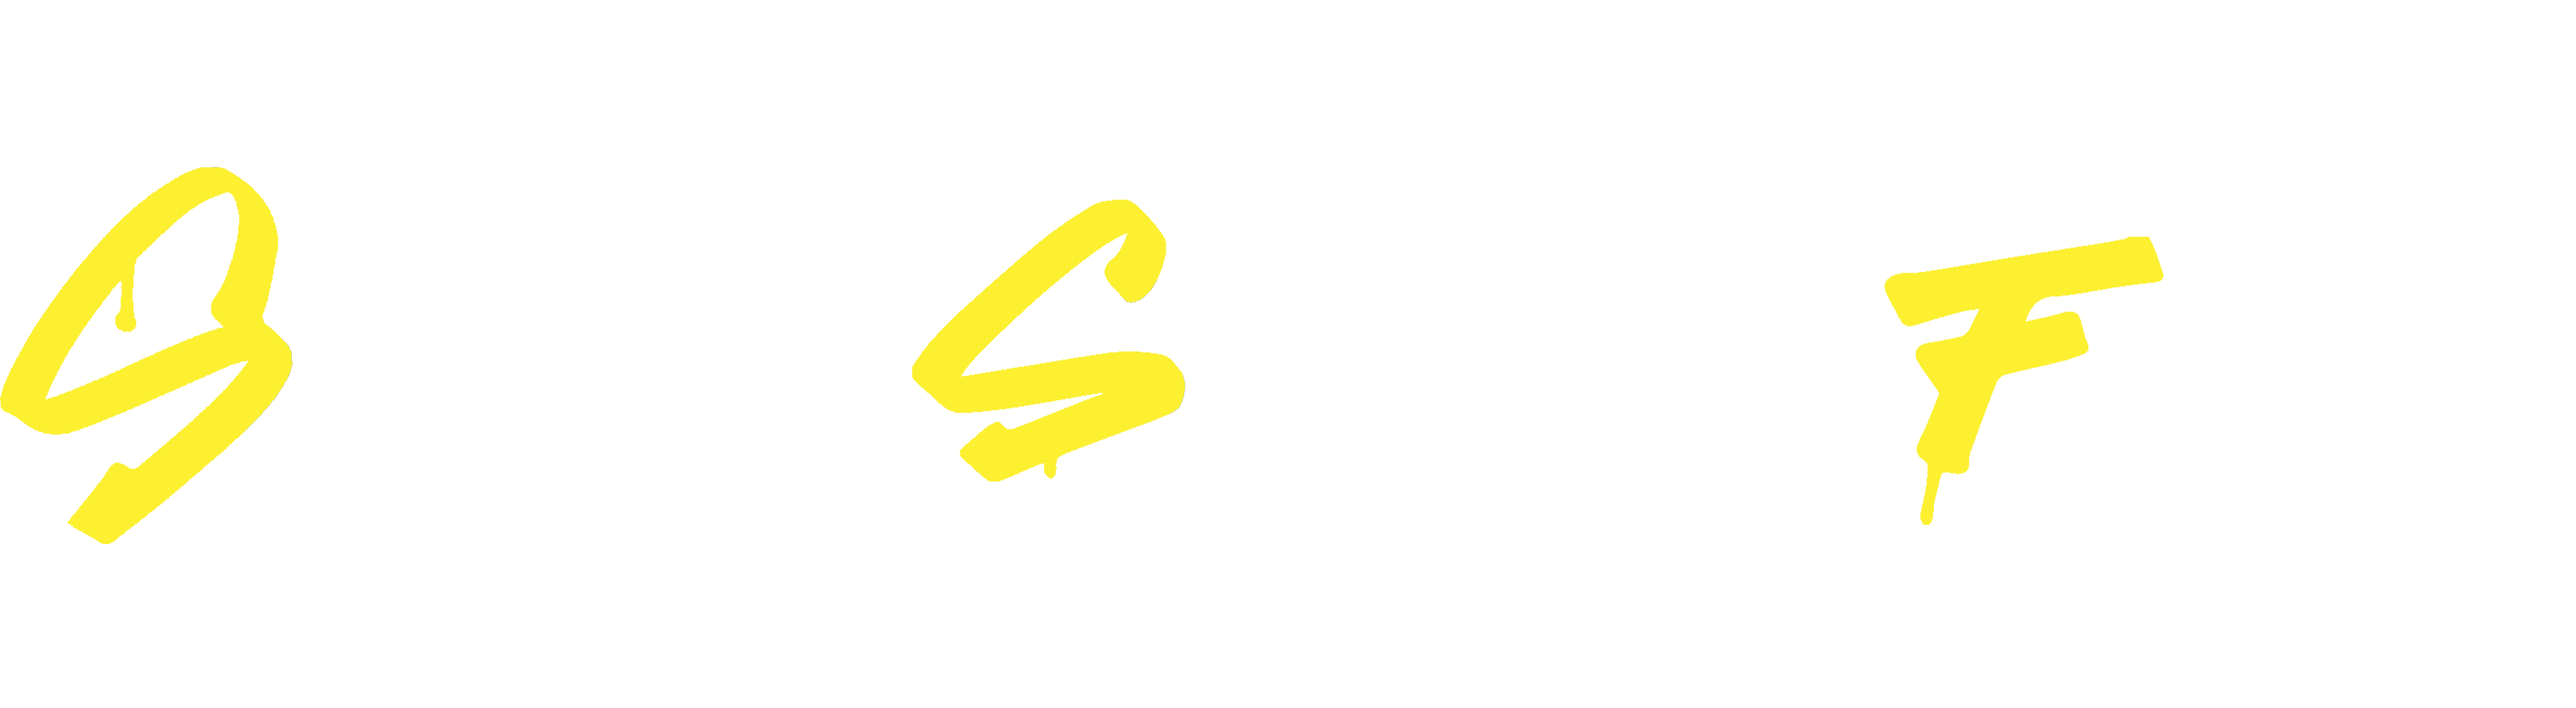 Sewer Street Fest